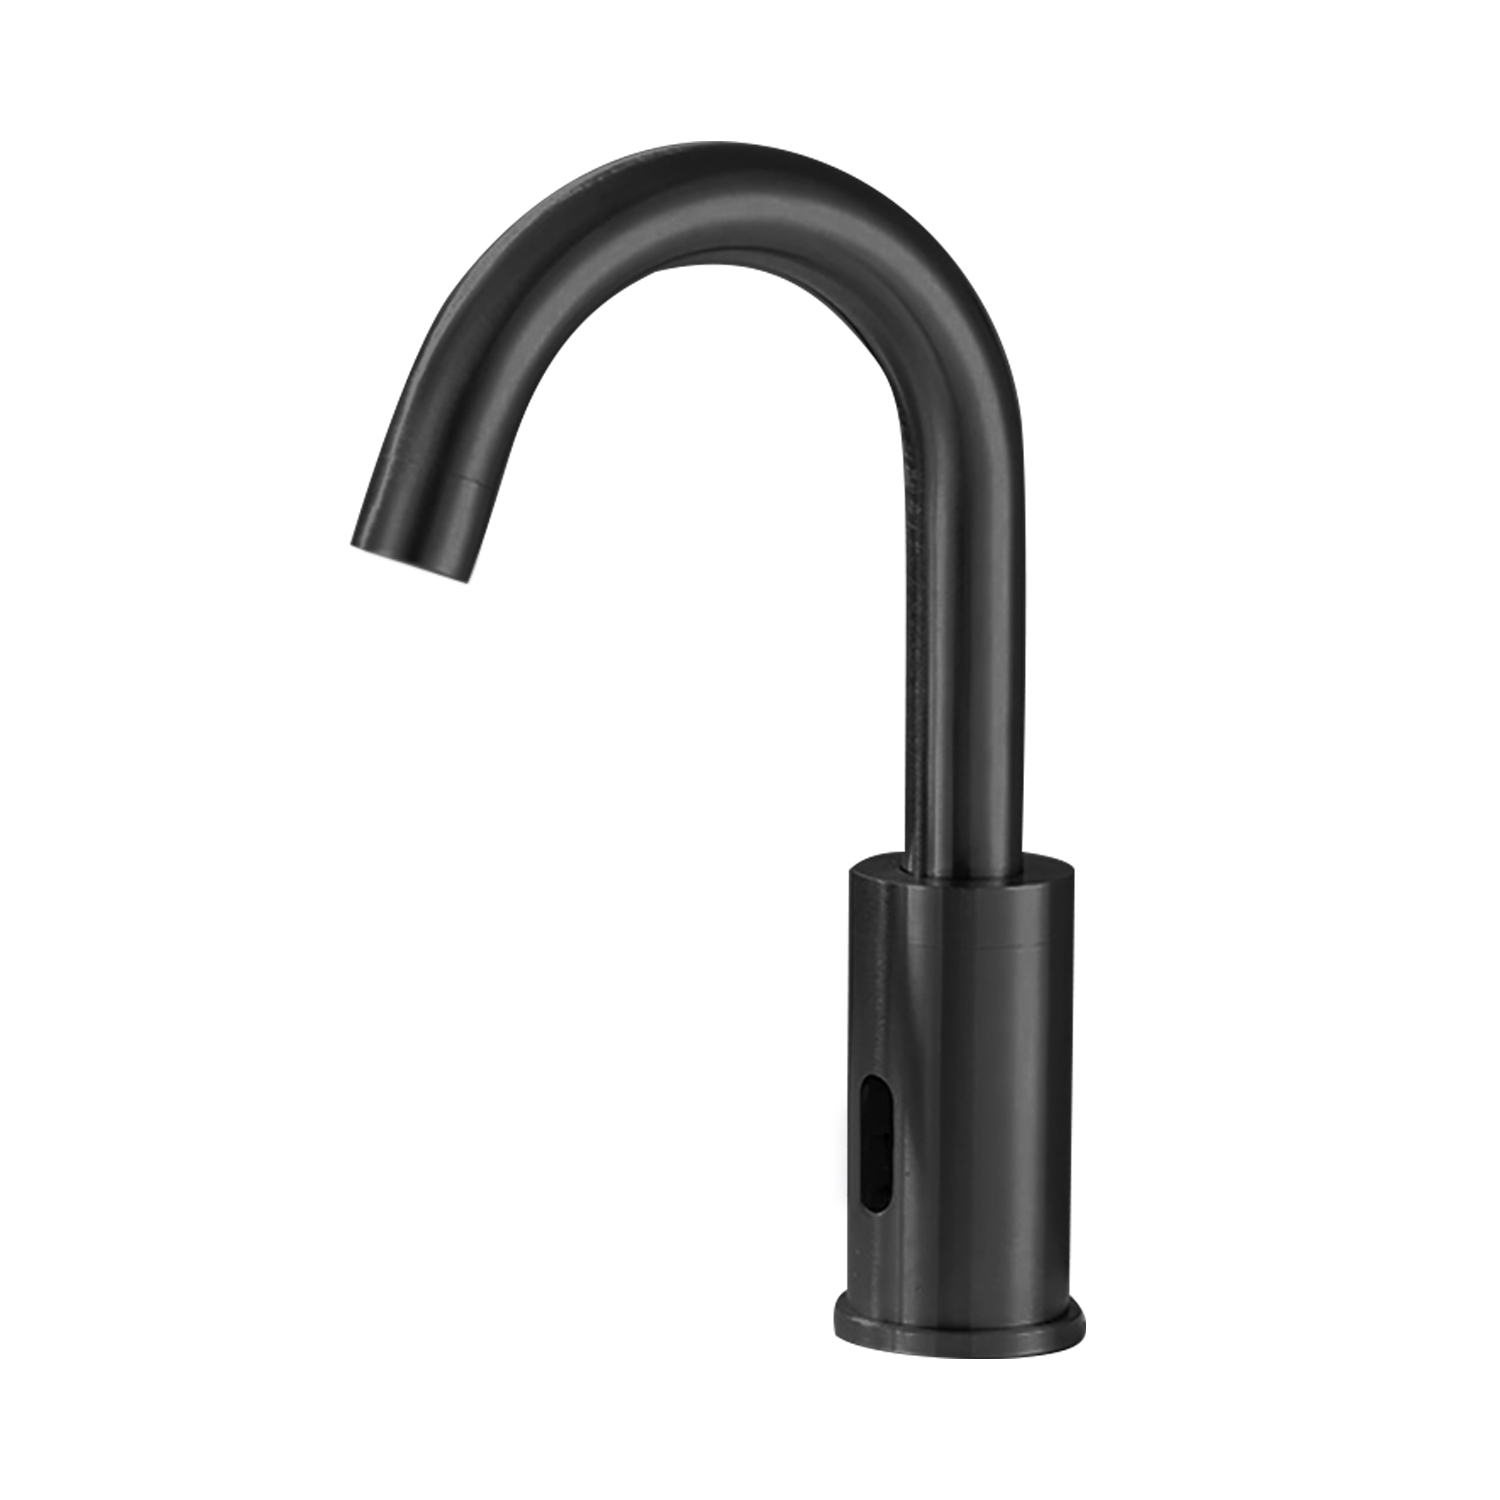 Fontana-Commercial-Dark-ORB-Motion-Sensor-Faucet-